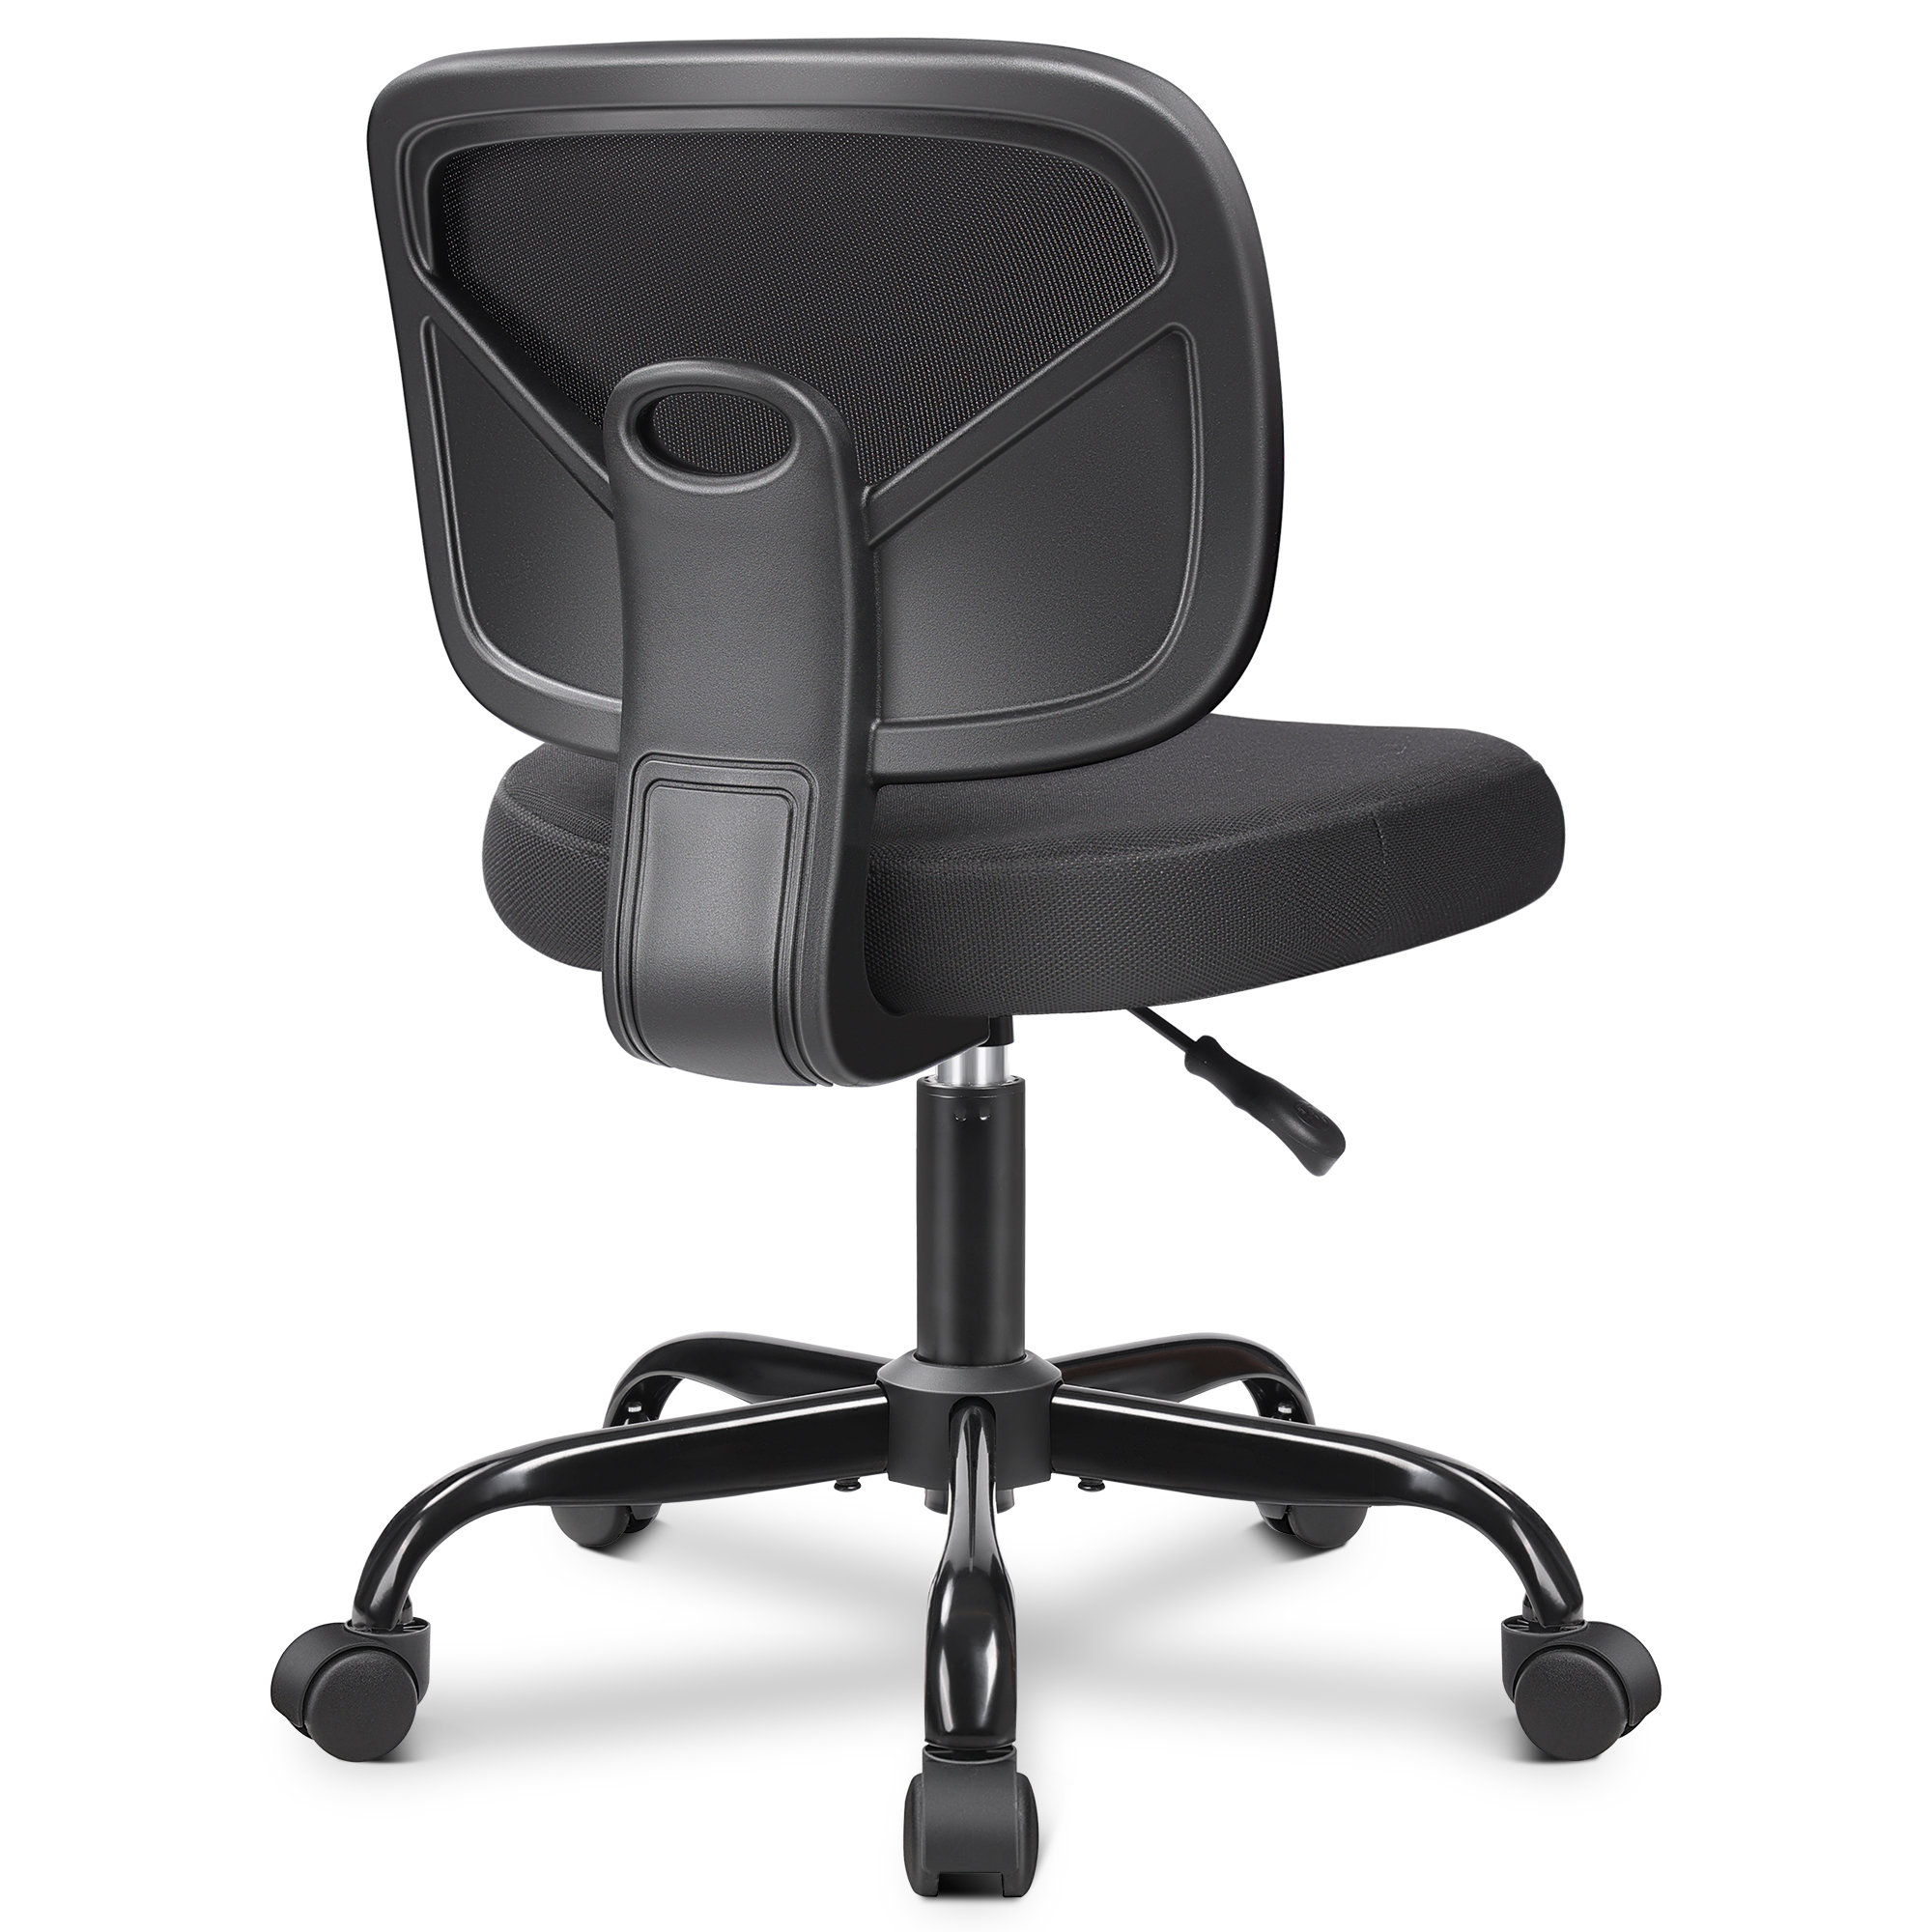 Kyrstie Adjustable Height Desk Chair and Ottoman Inbox Zero Color: Black